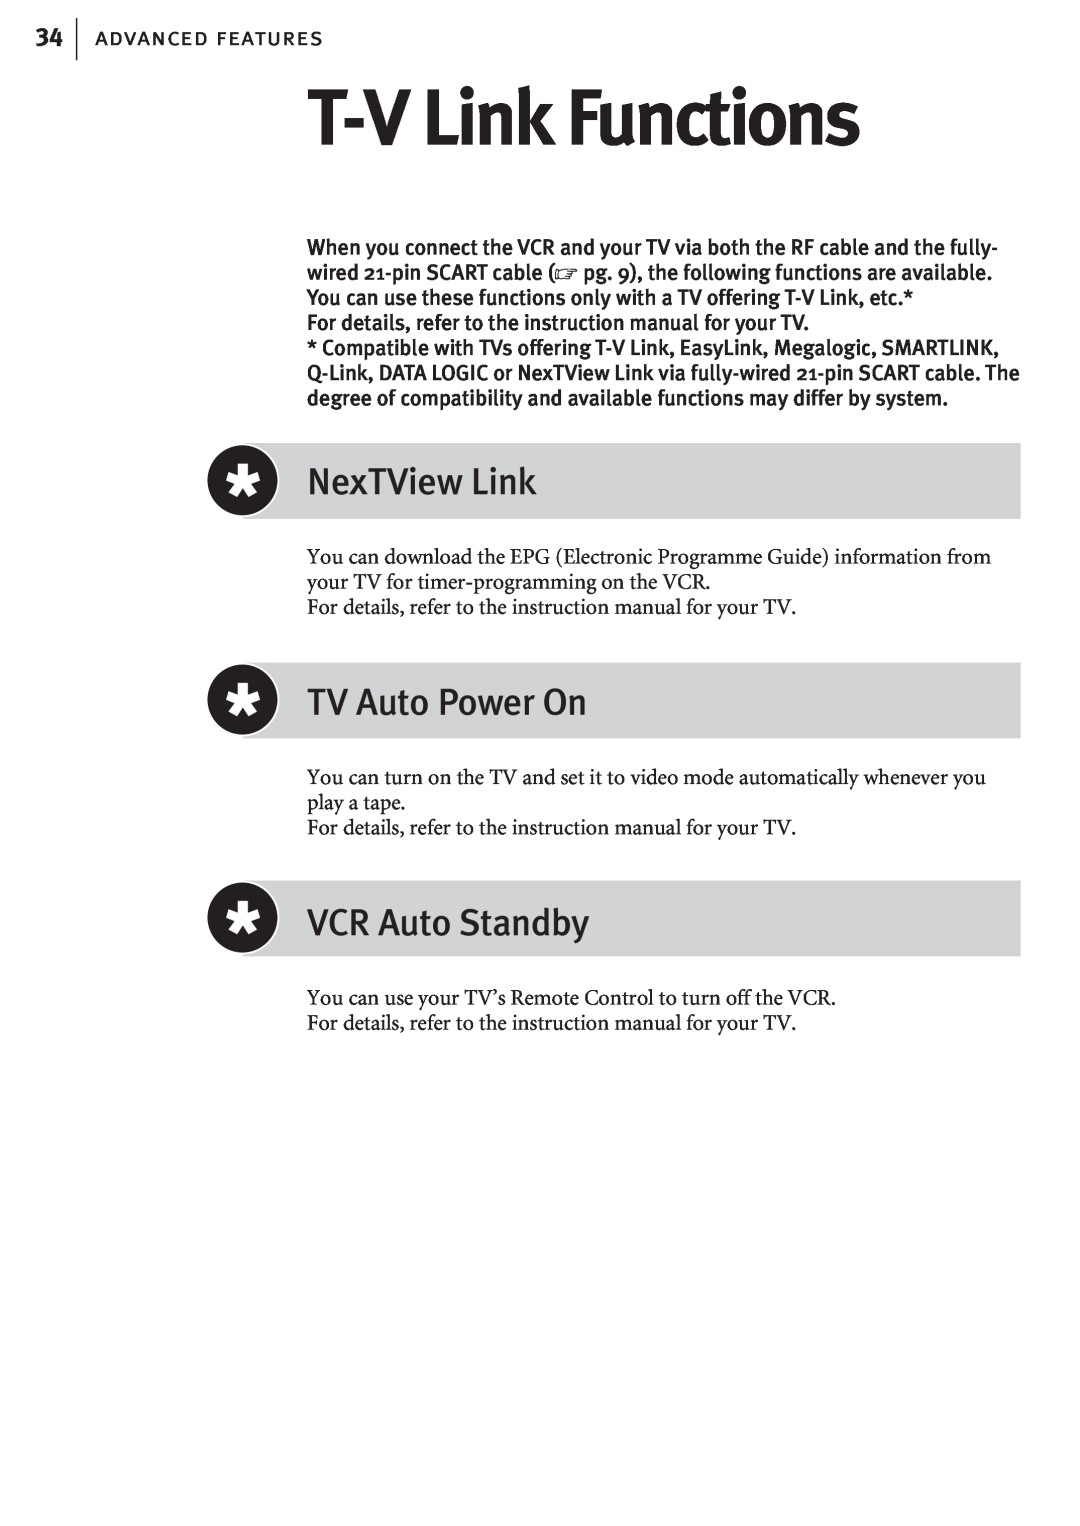 JVC HR-J682EK, HR-J680EK manual T-V Link Functions, NexTView Link, TV Auto Power On, VCR Auto Standby, advanced features 